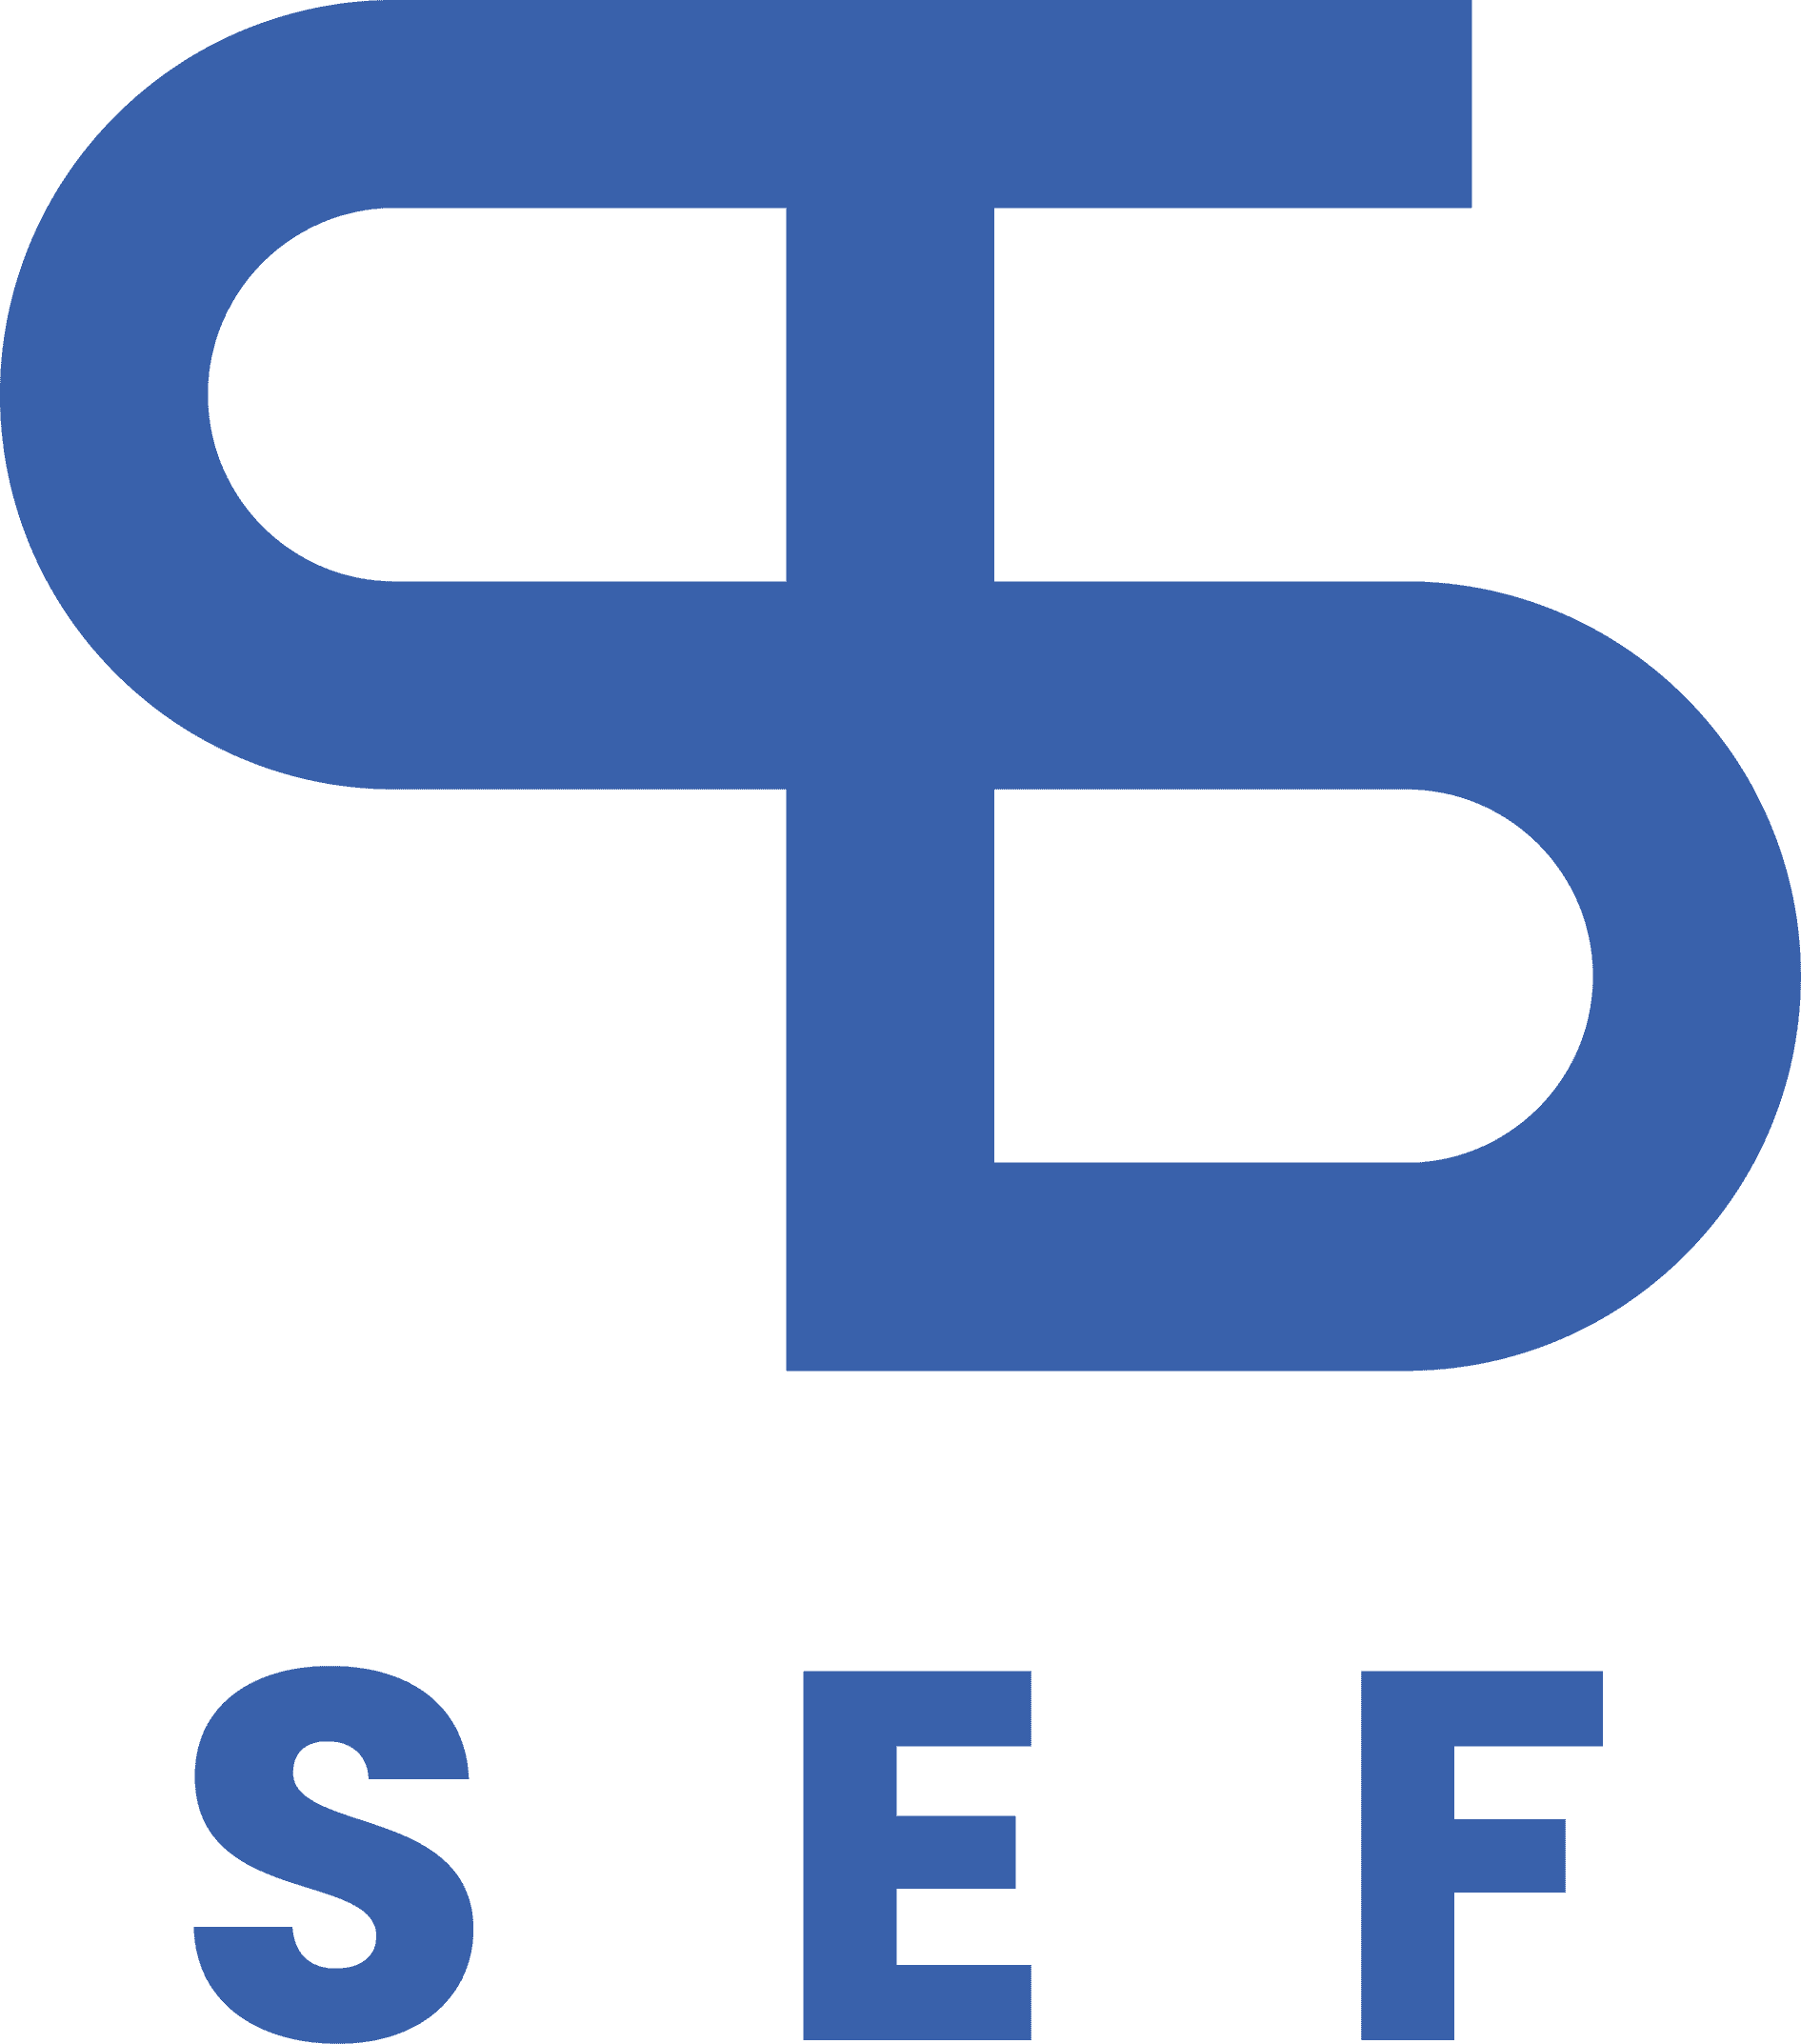 SEF_Surgical-European-Facilitator_logo